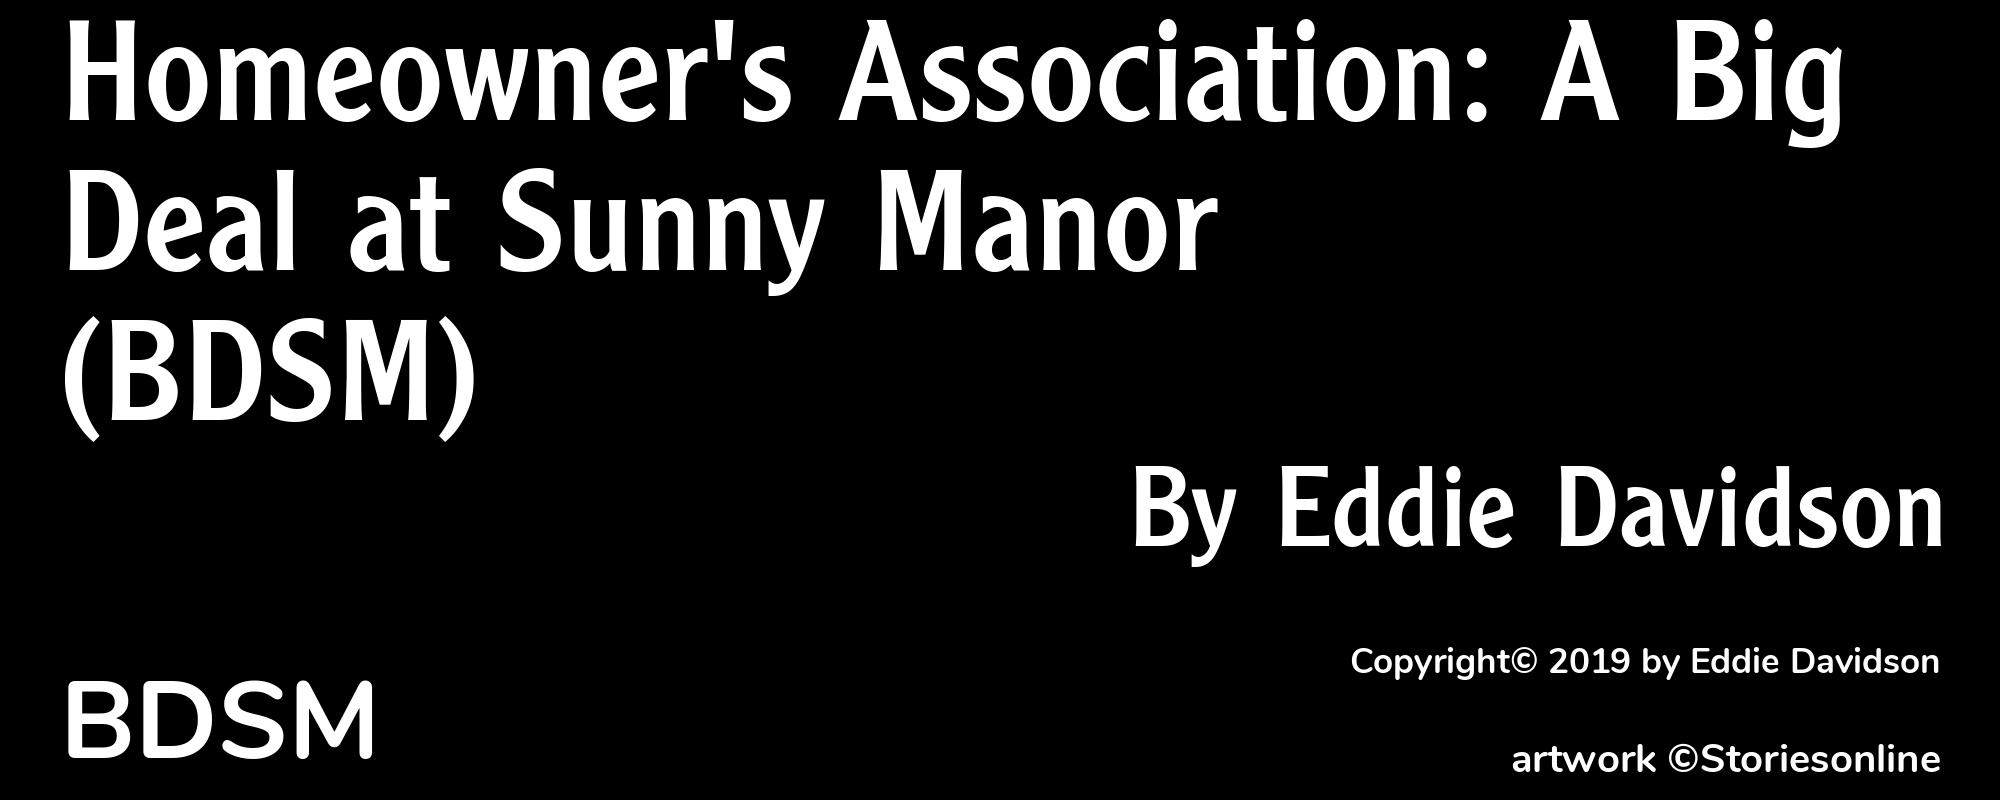 Homeowner's Association: A Big Deal at Sunny Manor (BDSM) - Cover